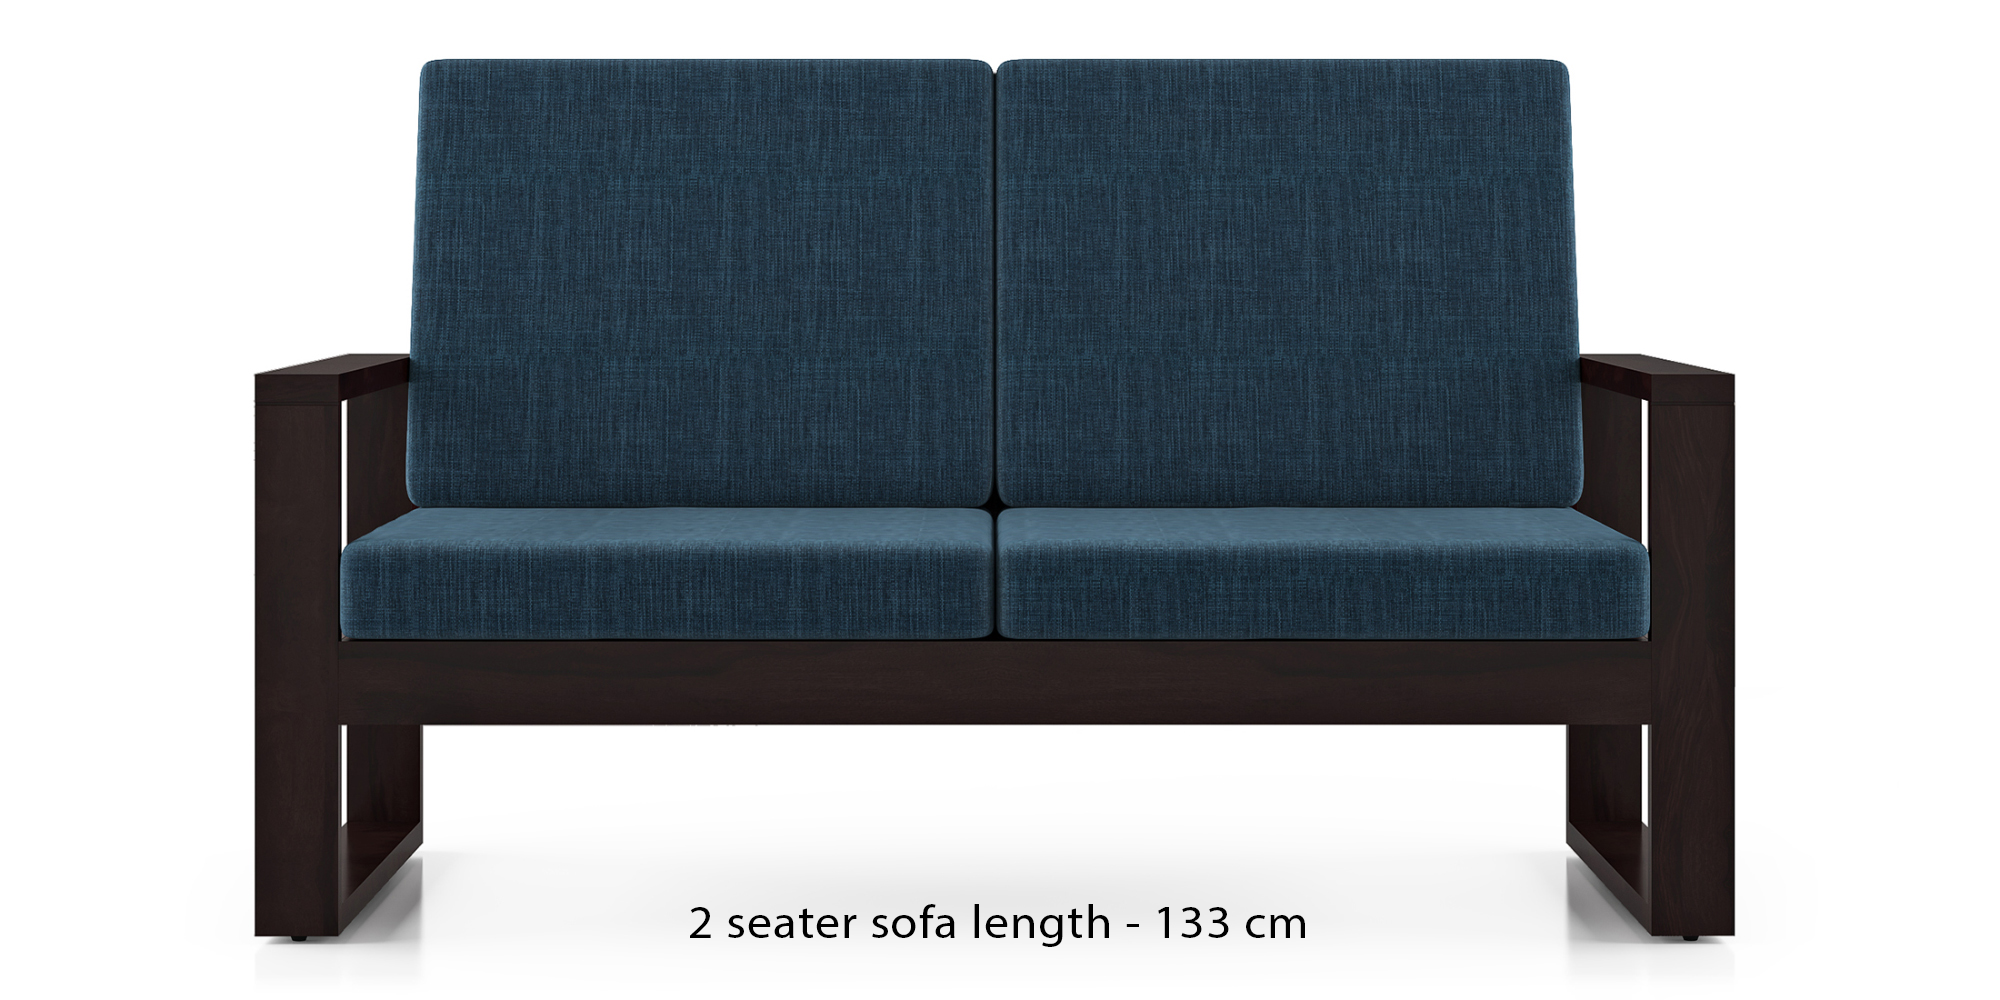 Eileen Wooden Sofa (Indigo Blue) (1-seater Custom Set - Sofas, None Standard Set - Sofas, Indigo Blue, Fabric Sofa Material, Regular Sofa Size, Regular Sofa Type) by Urban Ladder - - 613924